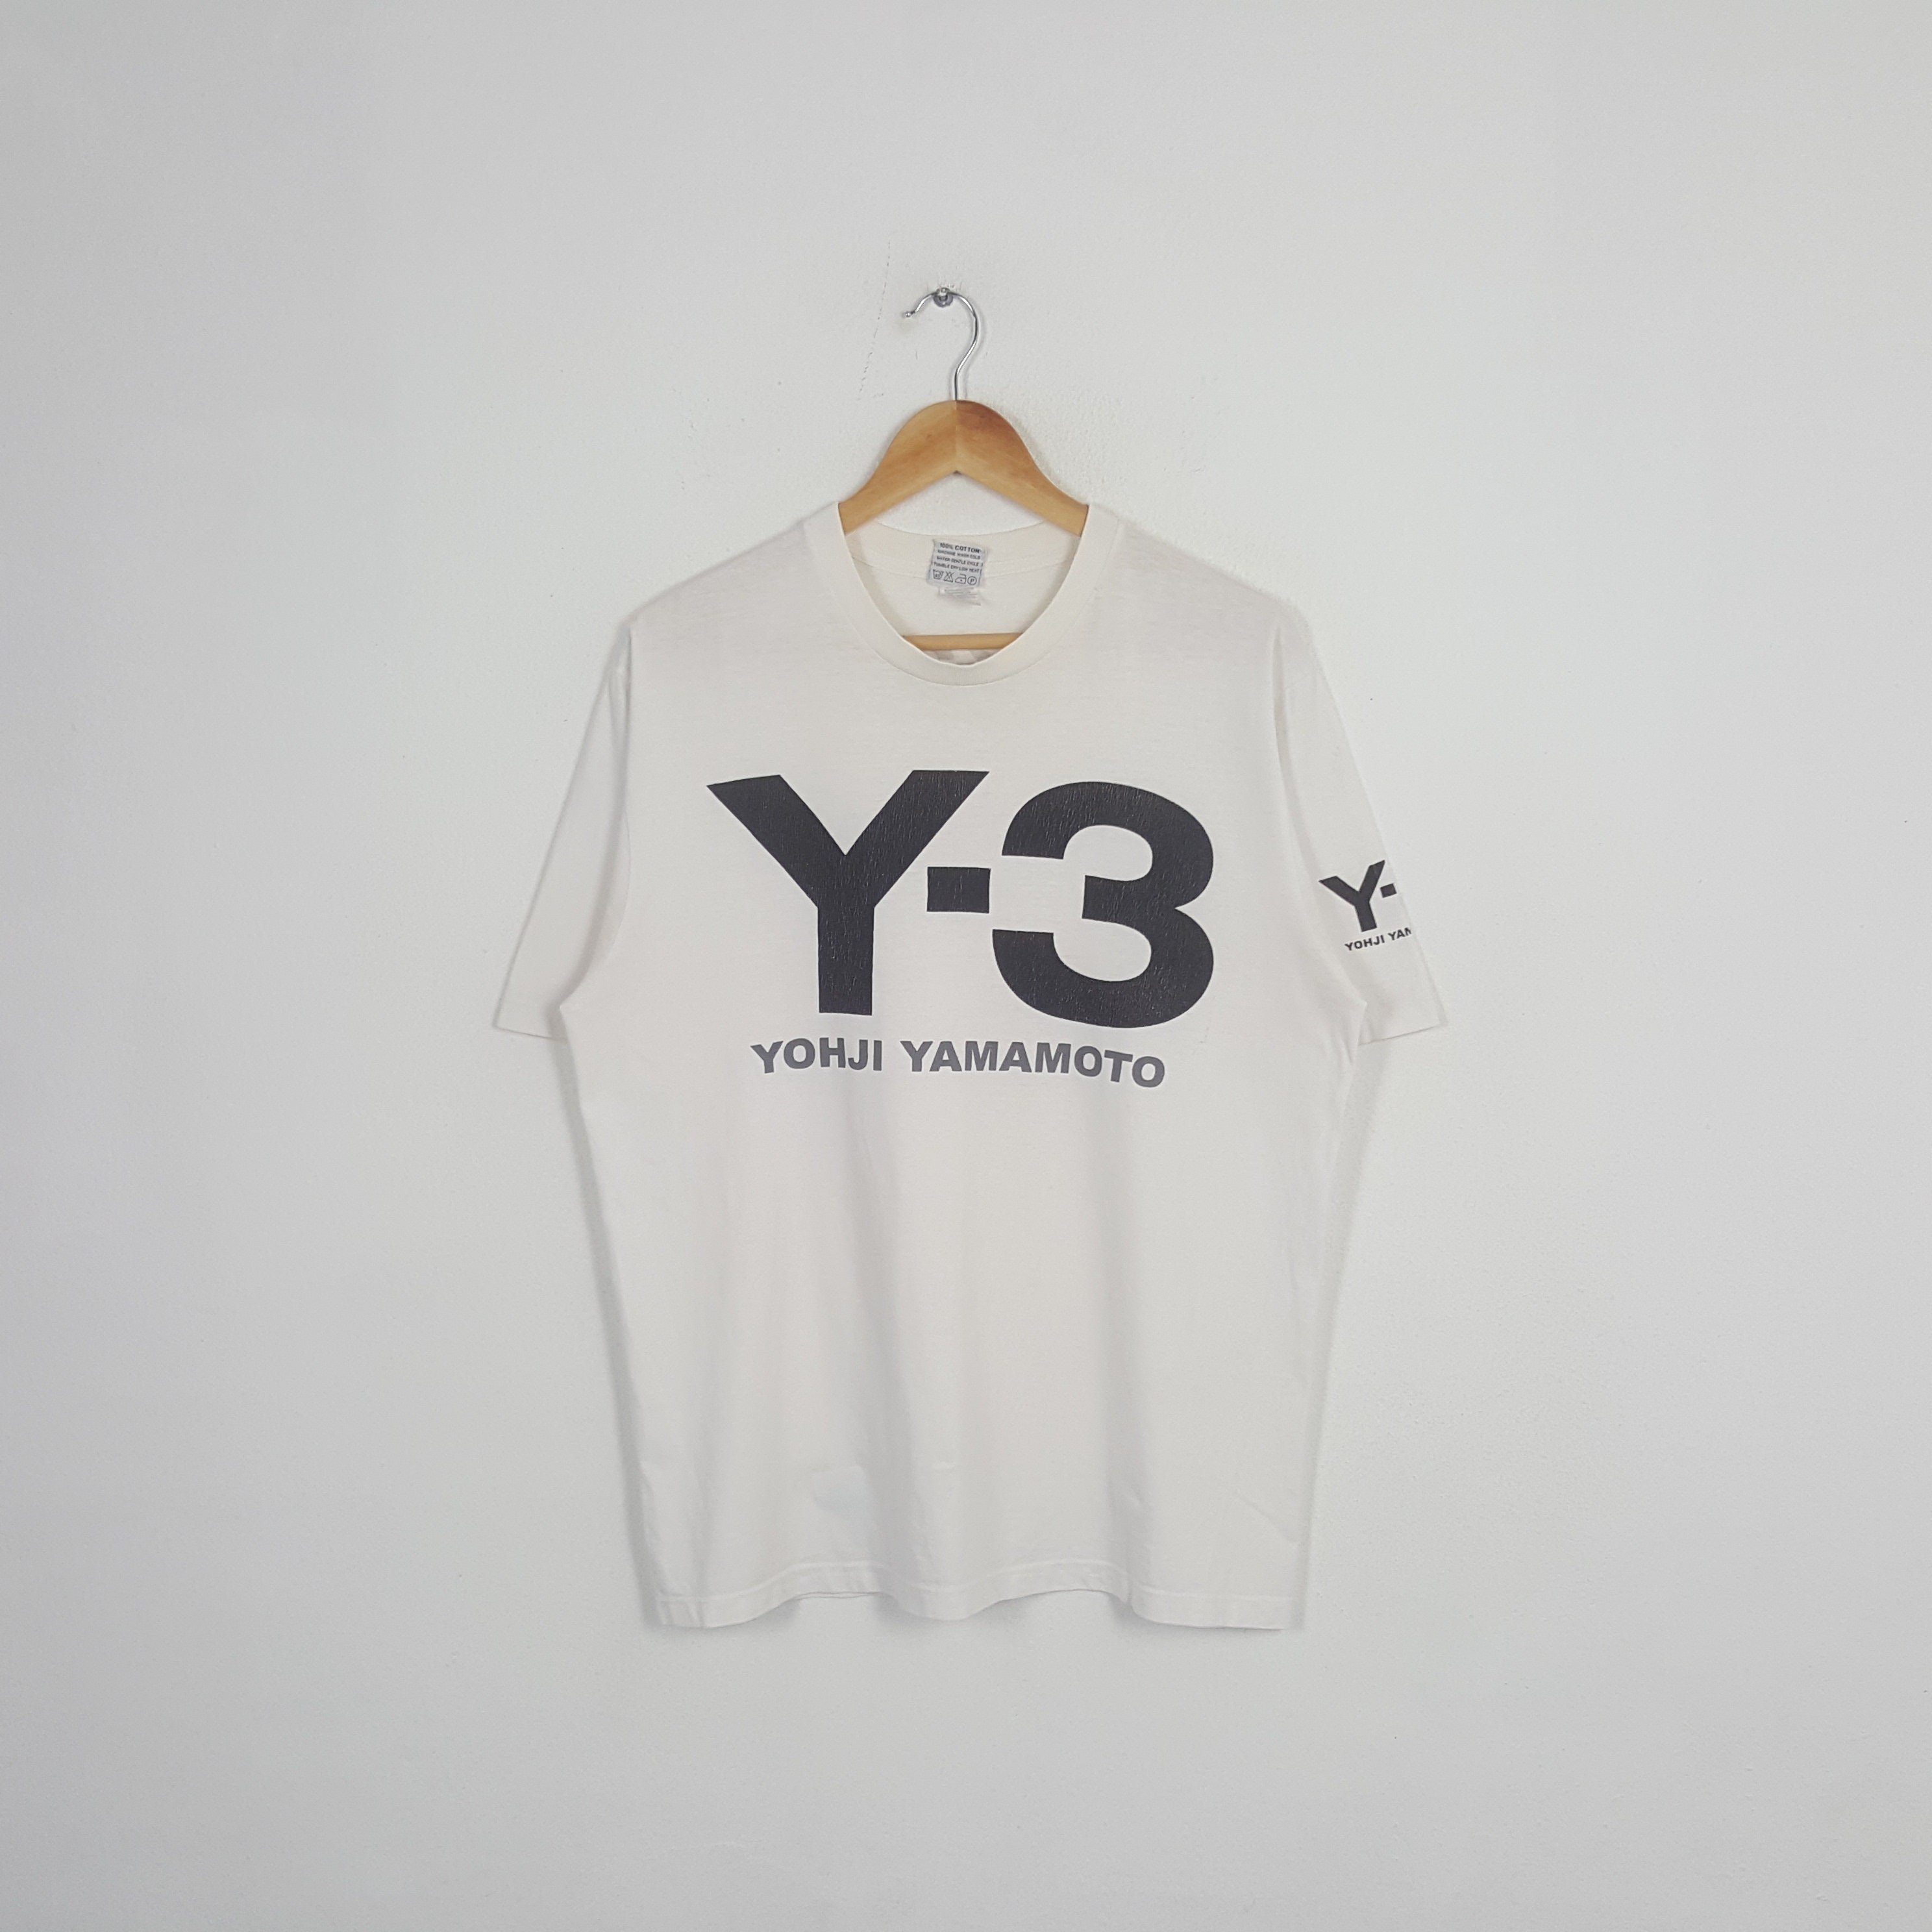 Vintage Y-3 Yohji Yamamoto Japanese Tshirt Etsy